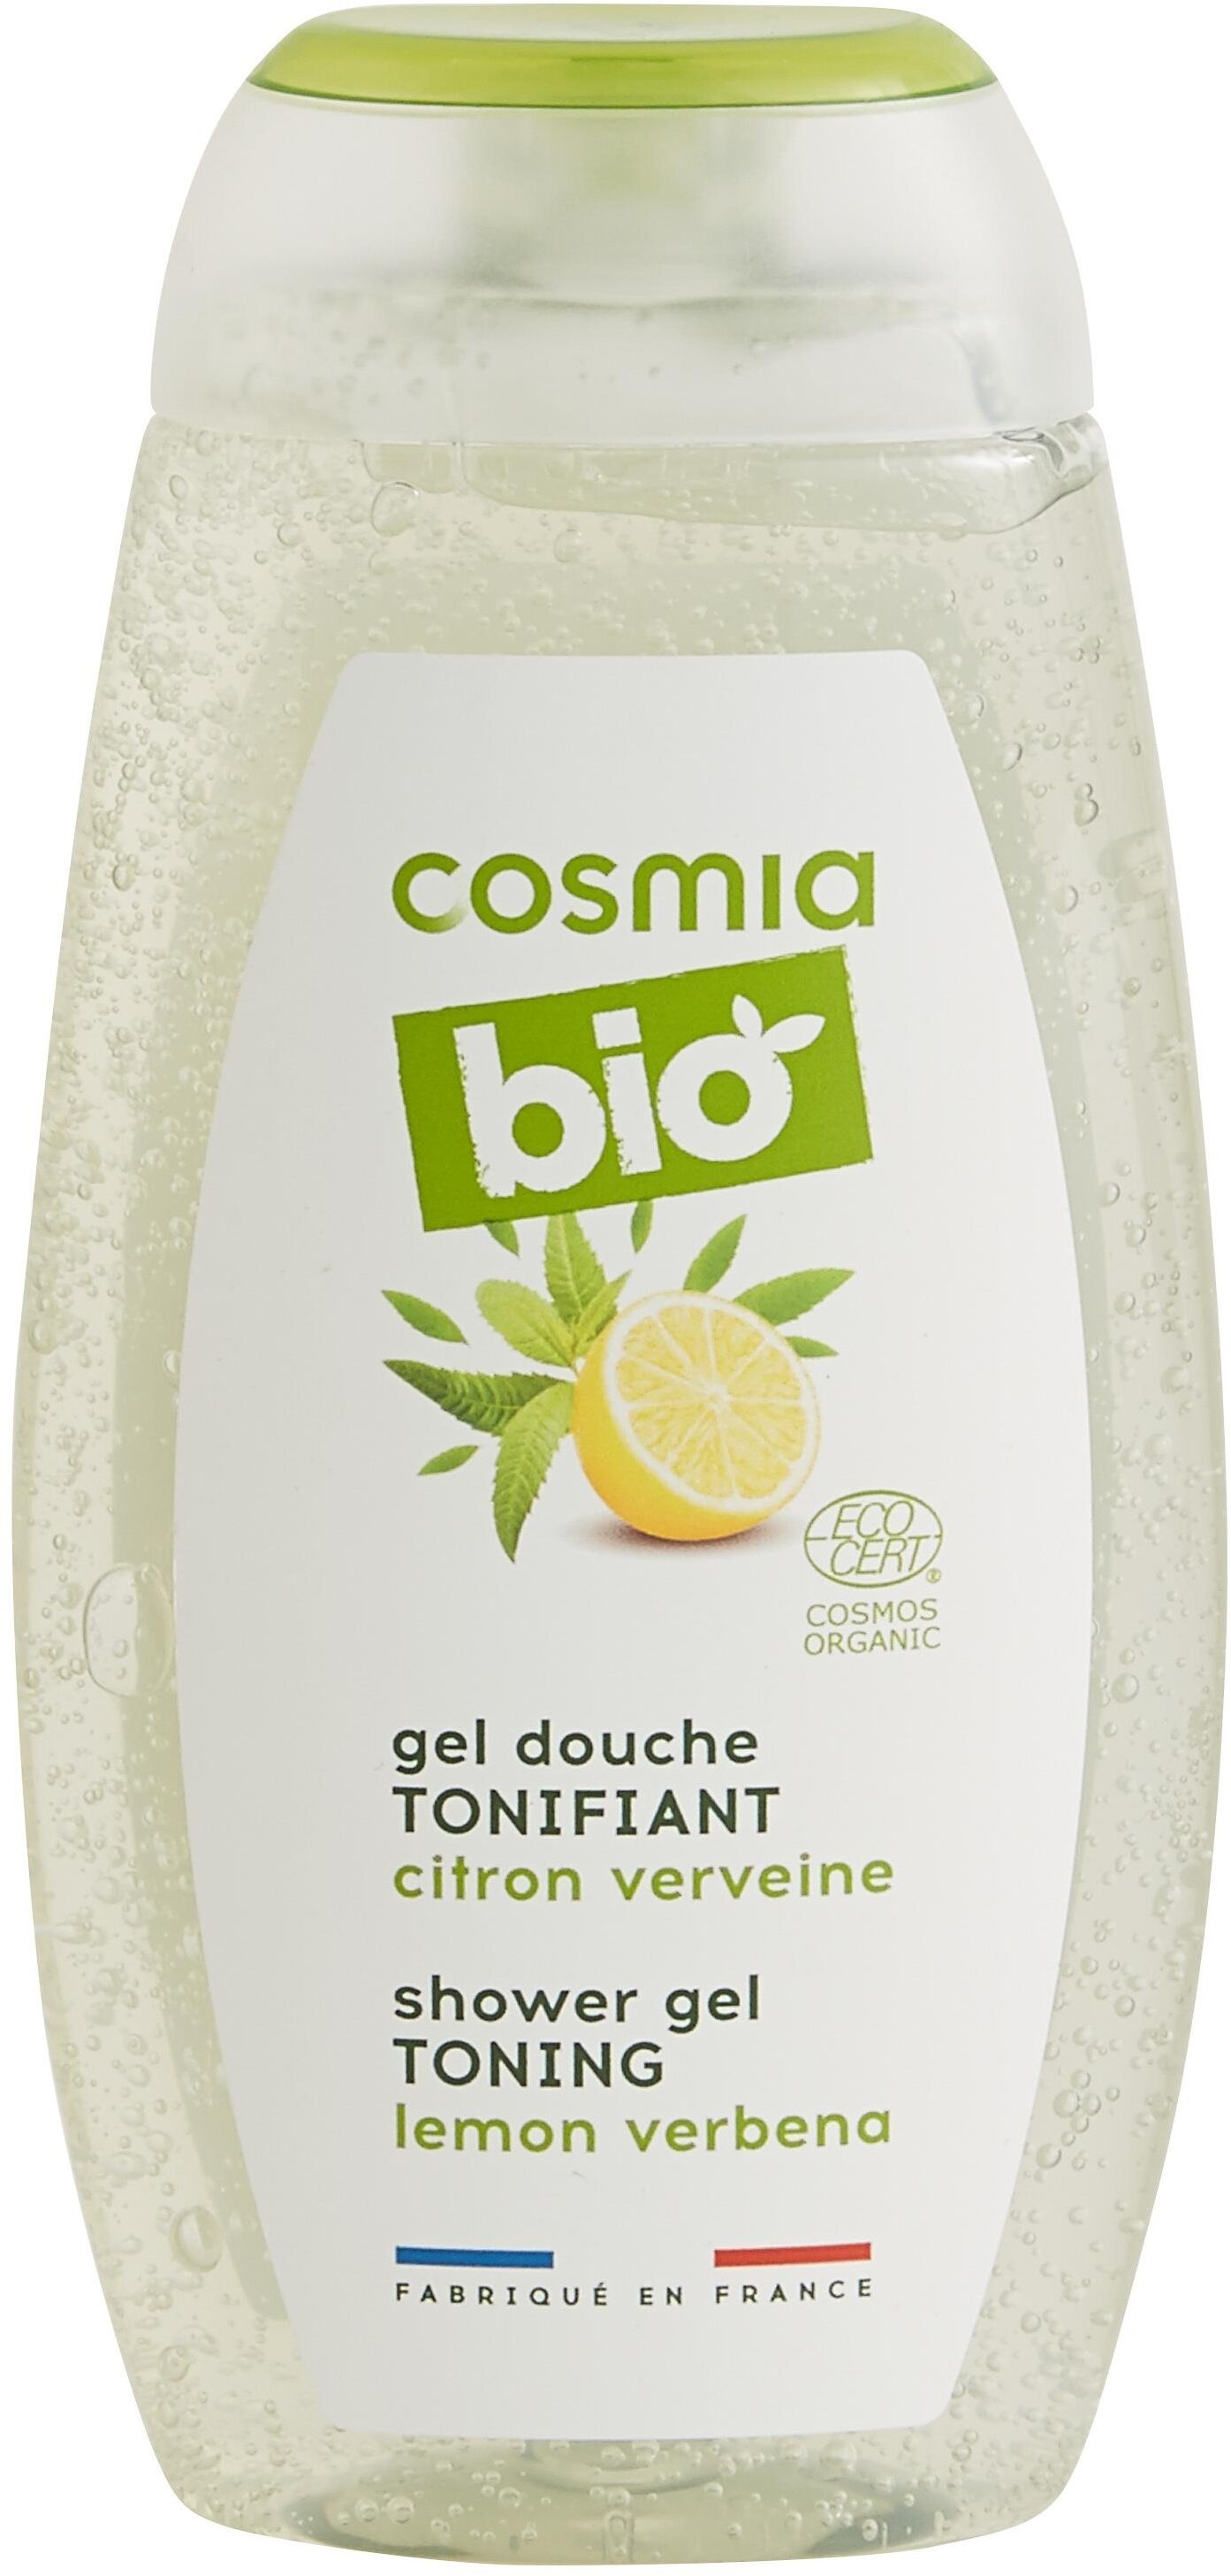 Cosmia bio gel douche tonifiant citron verveine - מוצר - fr